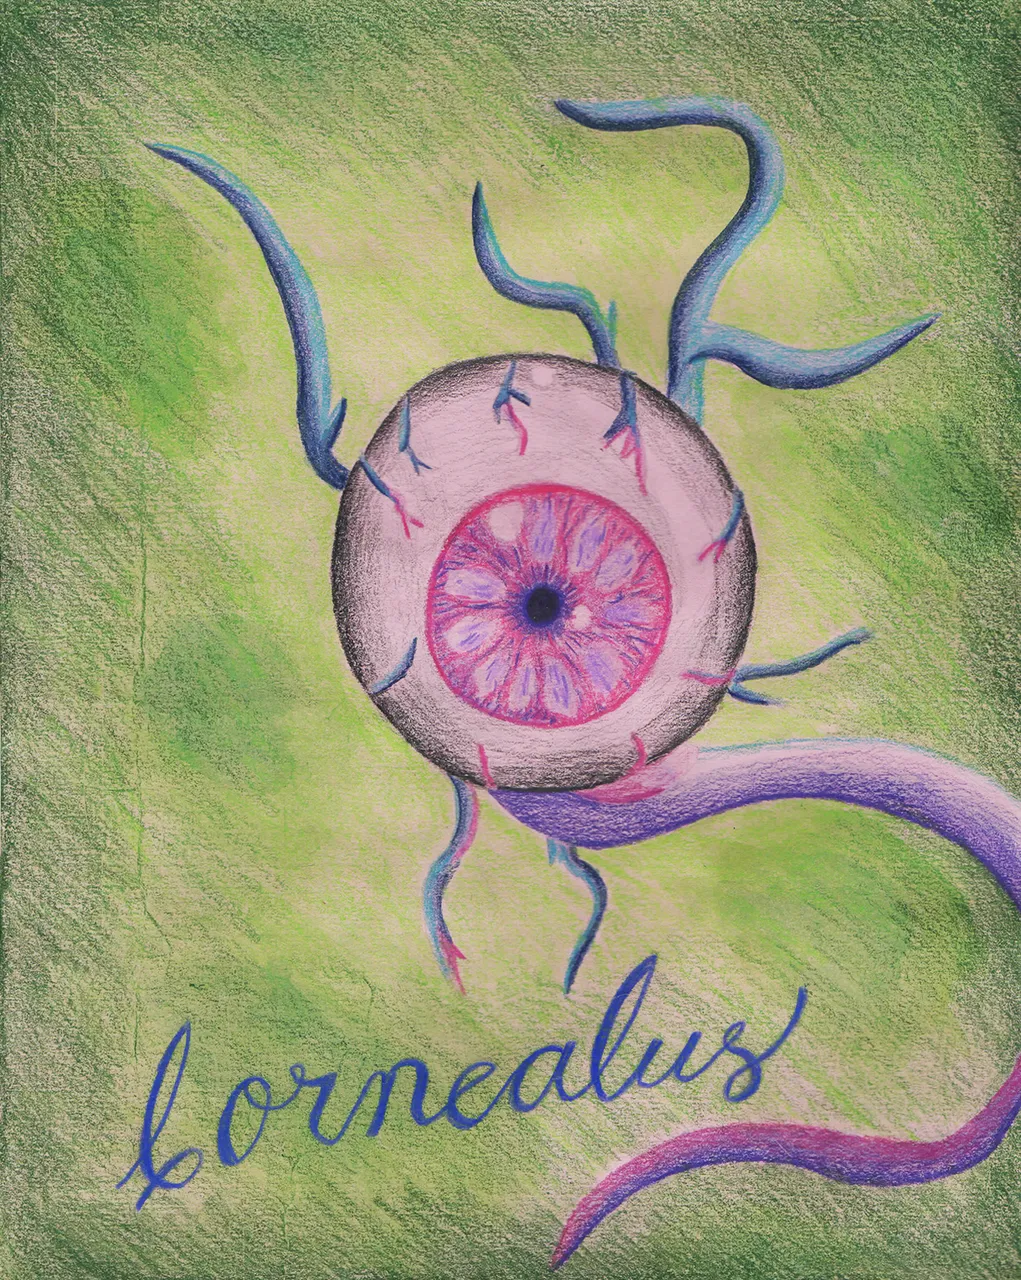 cornealus.png